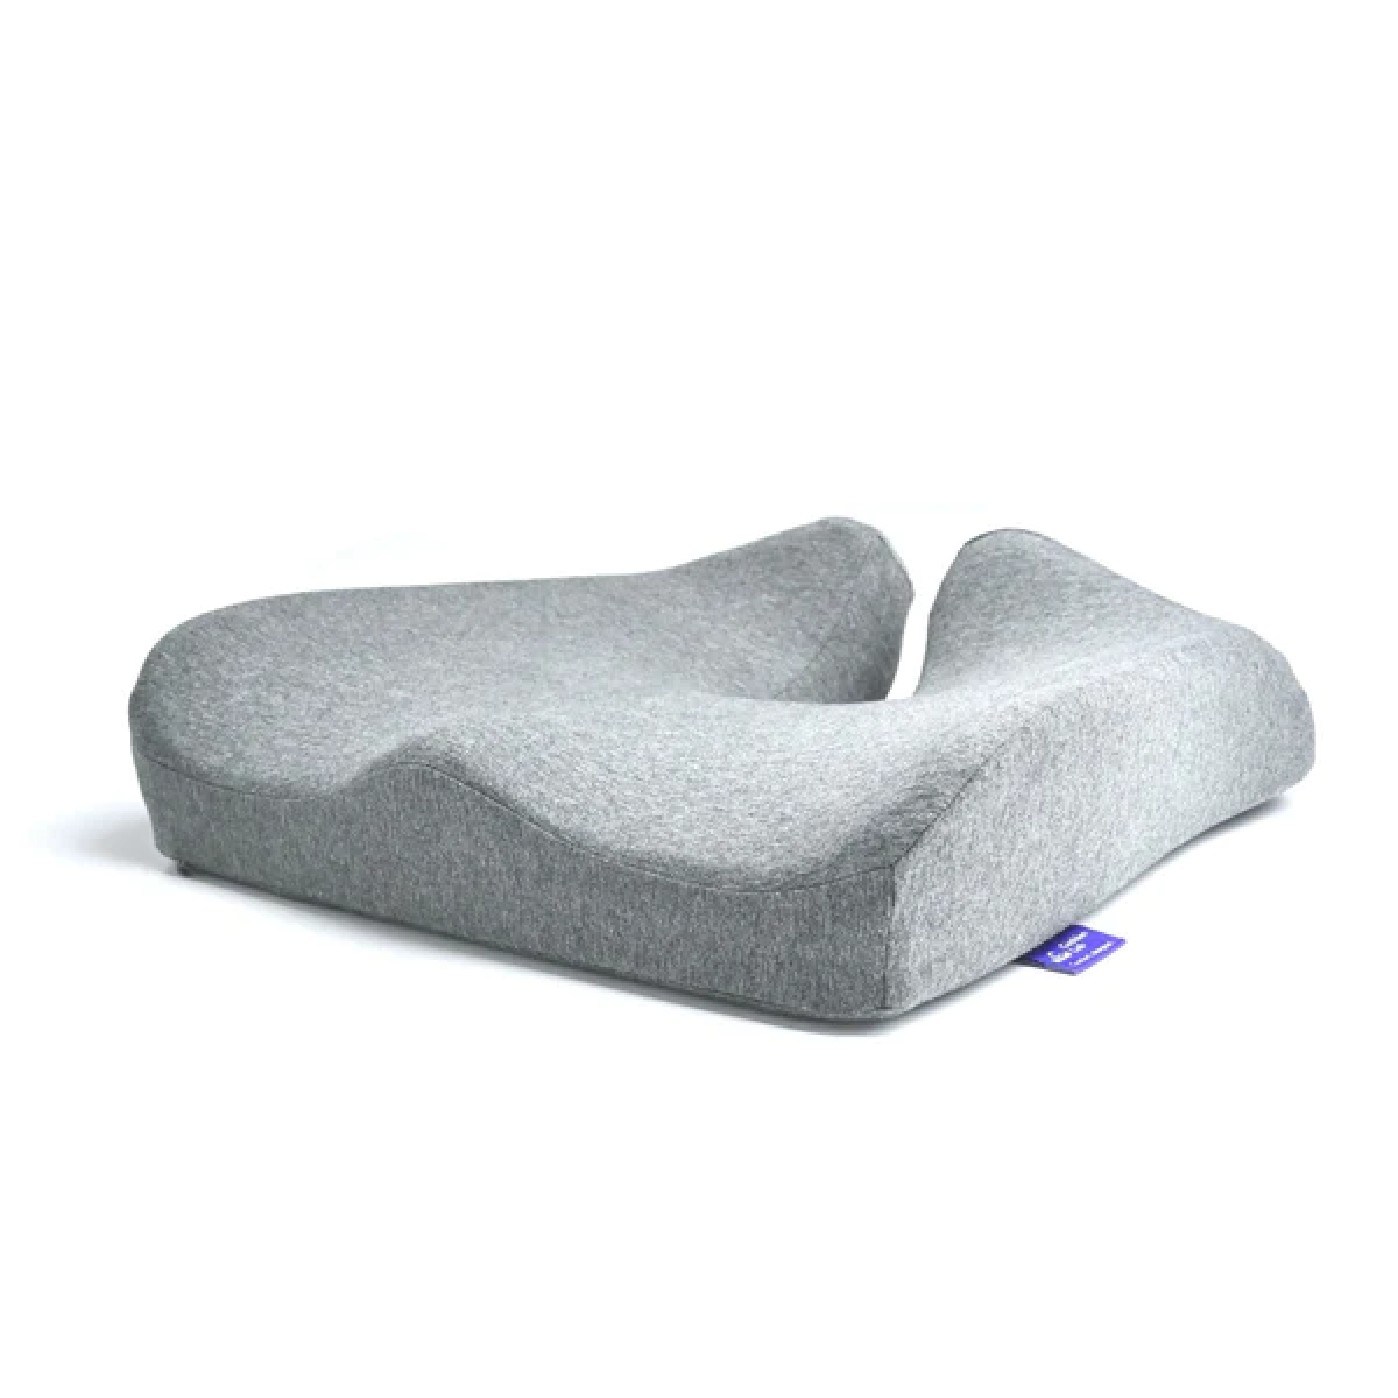 ALREMO HUANGXING - Inflatable Seat Cushion Orthopedic Ergonomic